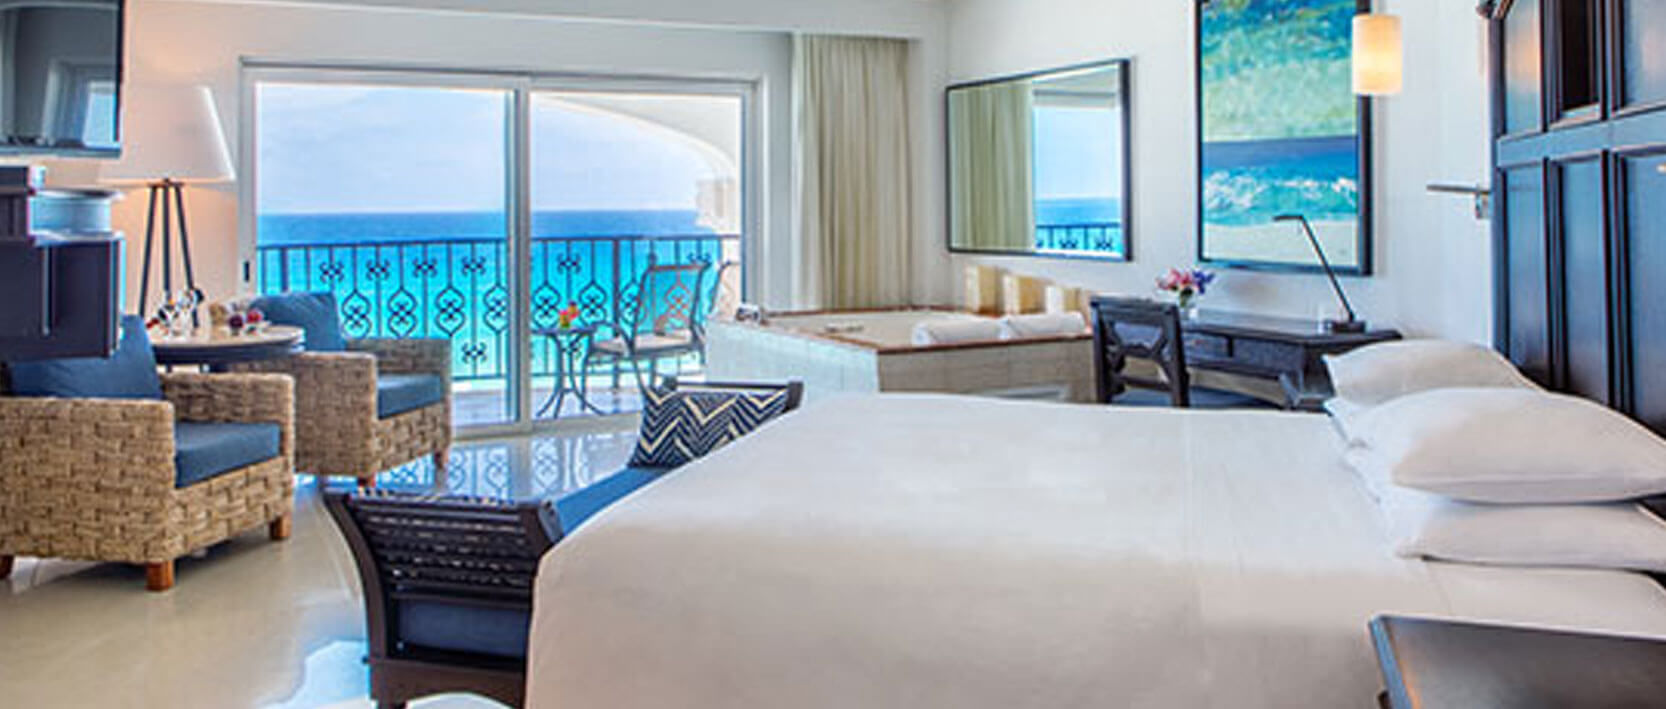 Hyatt Zilara Cancun Accommodations - Oceanfront Luxury Suite King